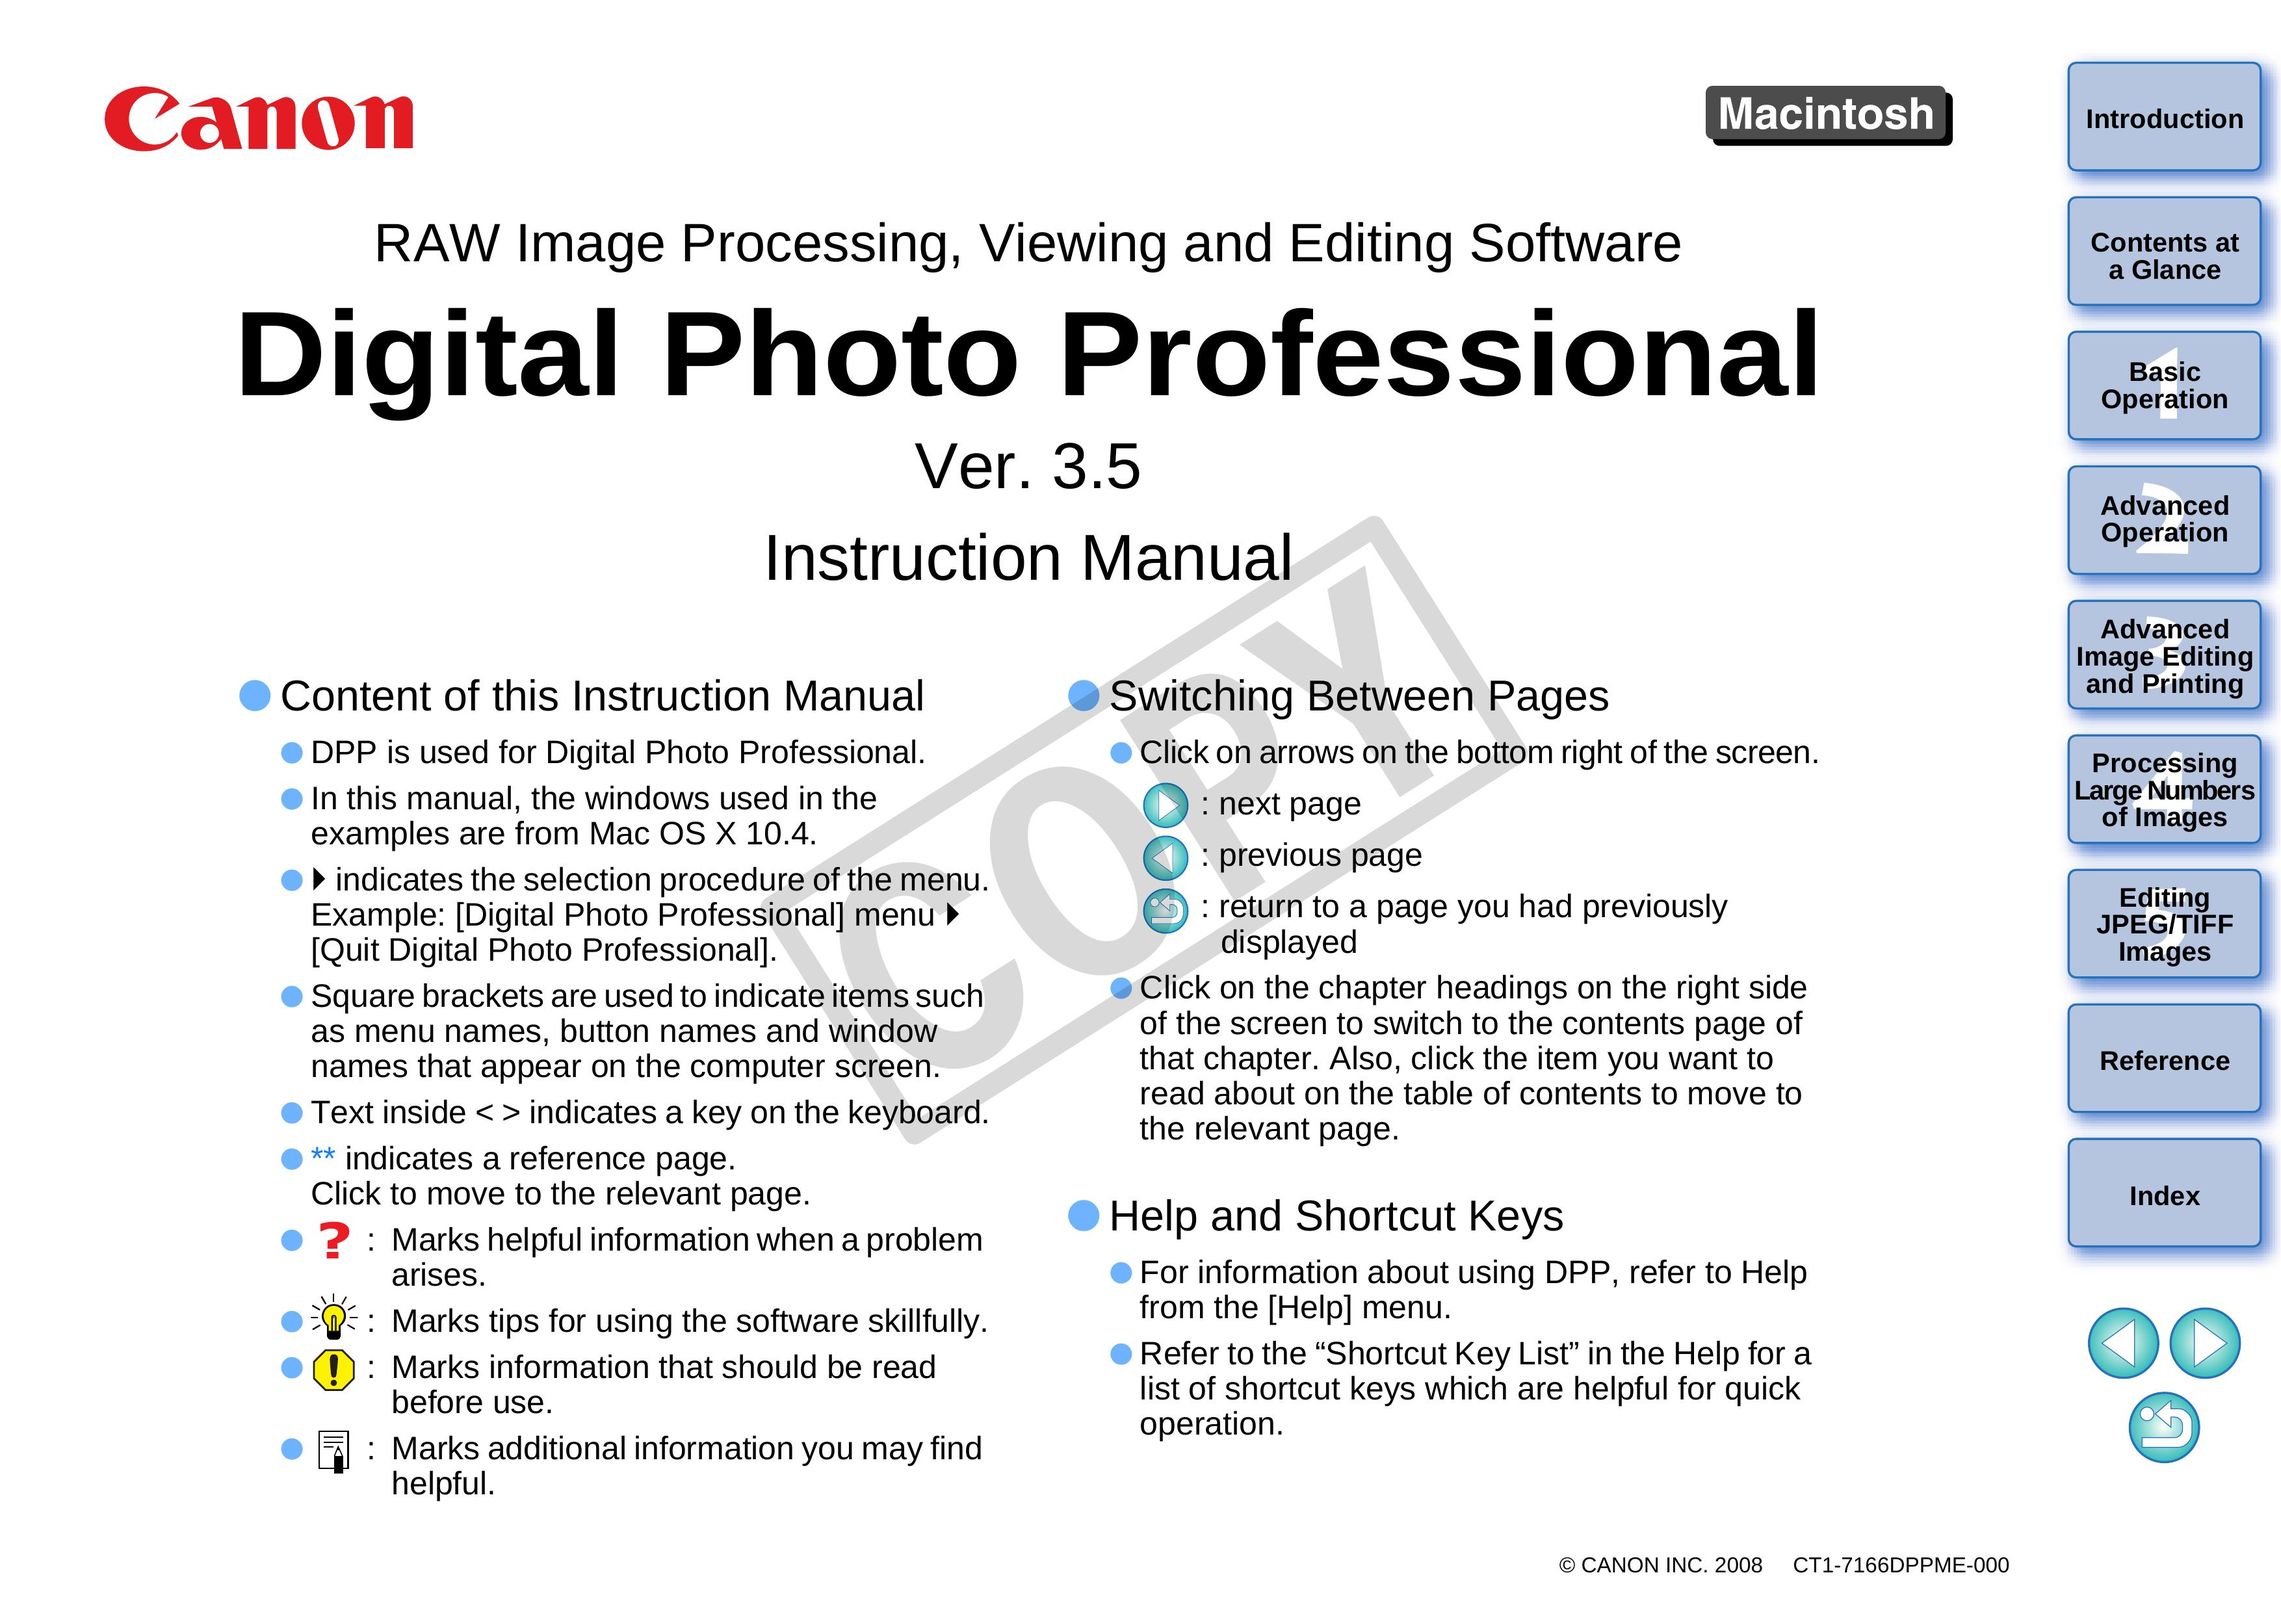 Canon digital photo professional Computer Accessories User Manual